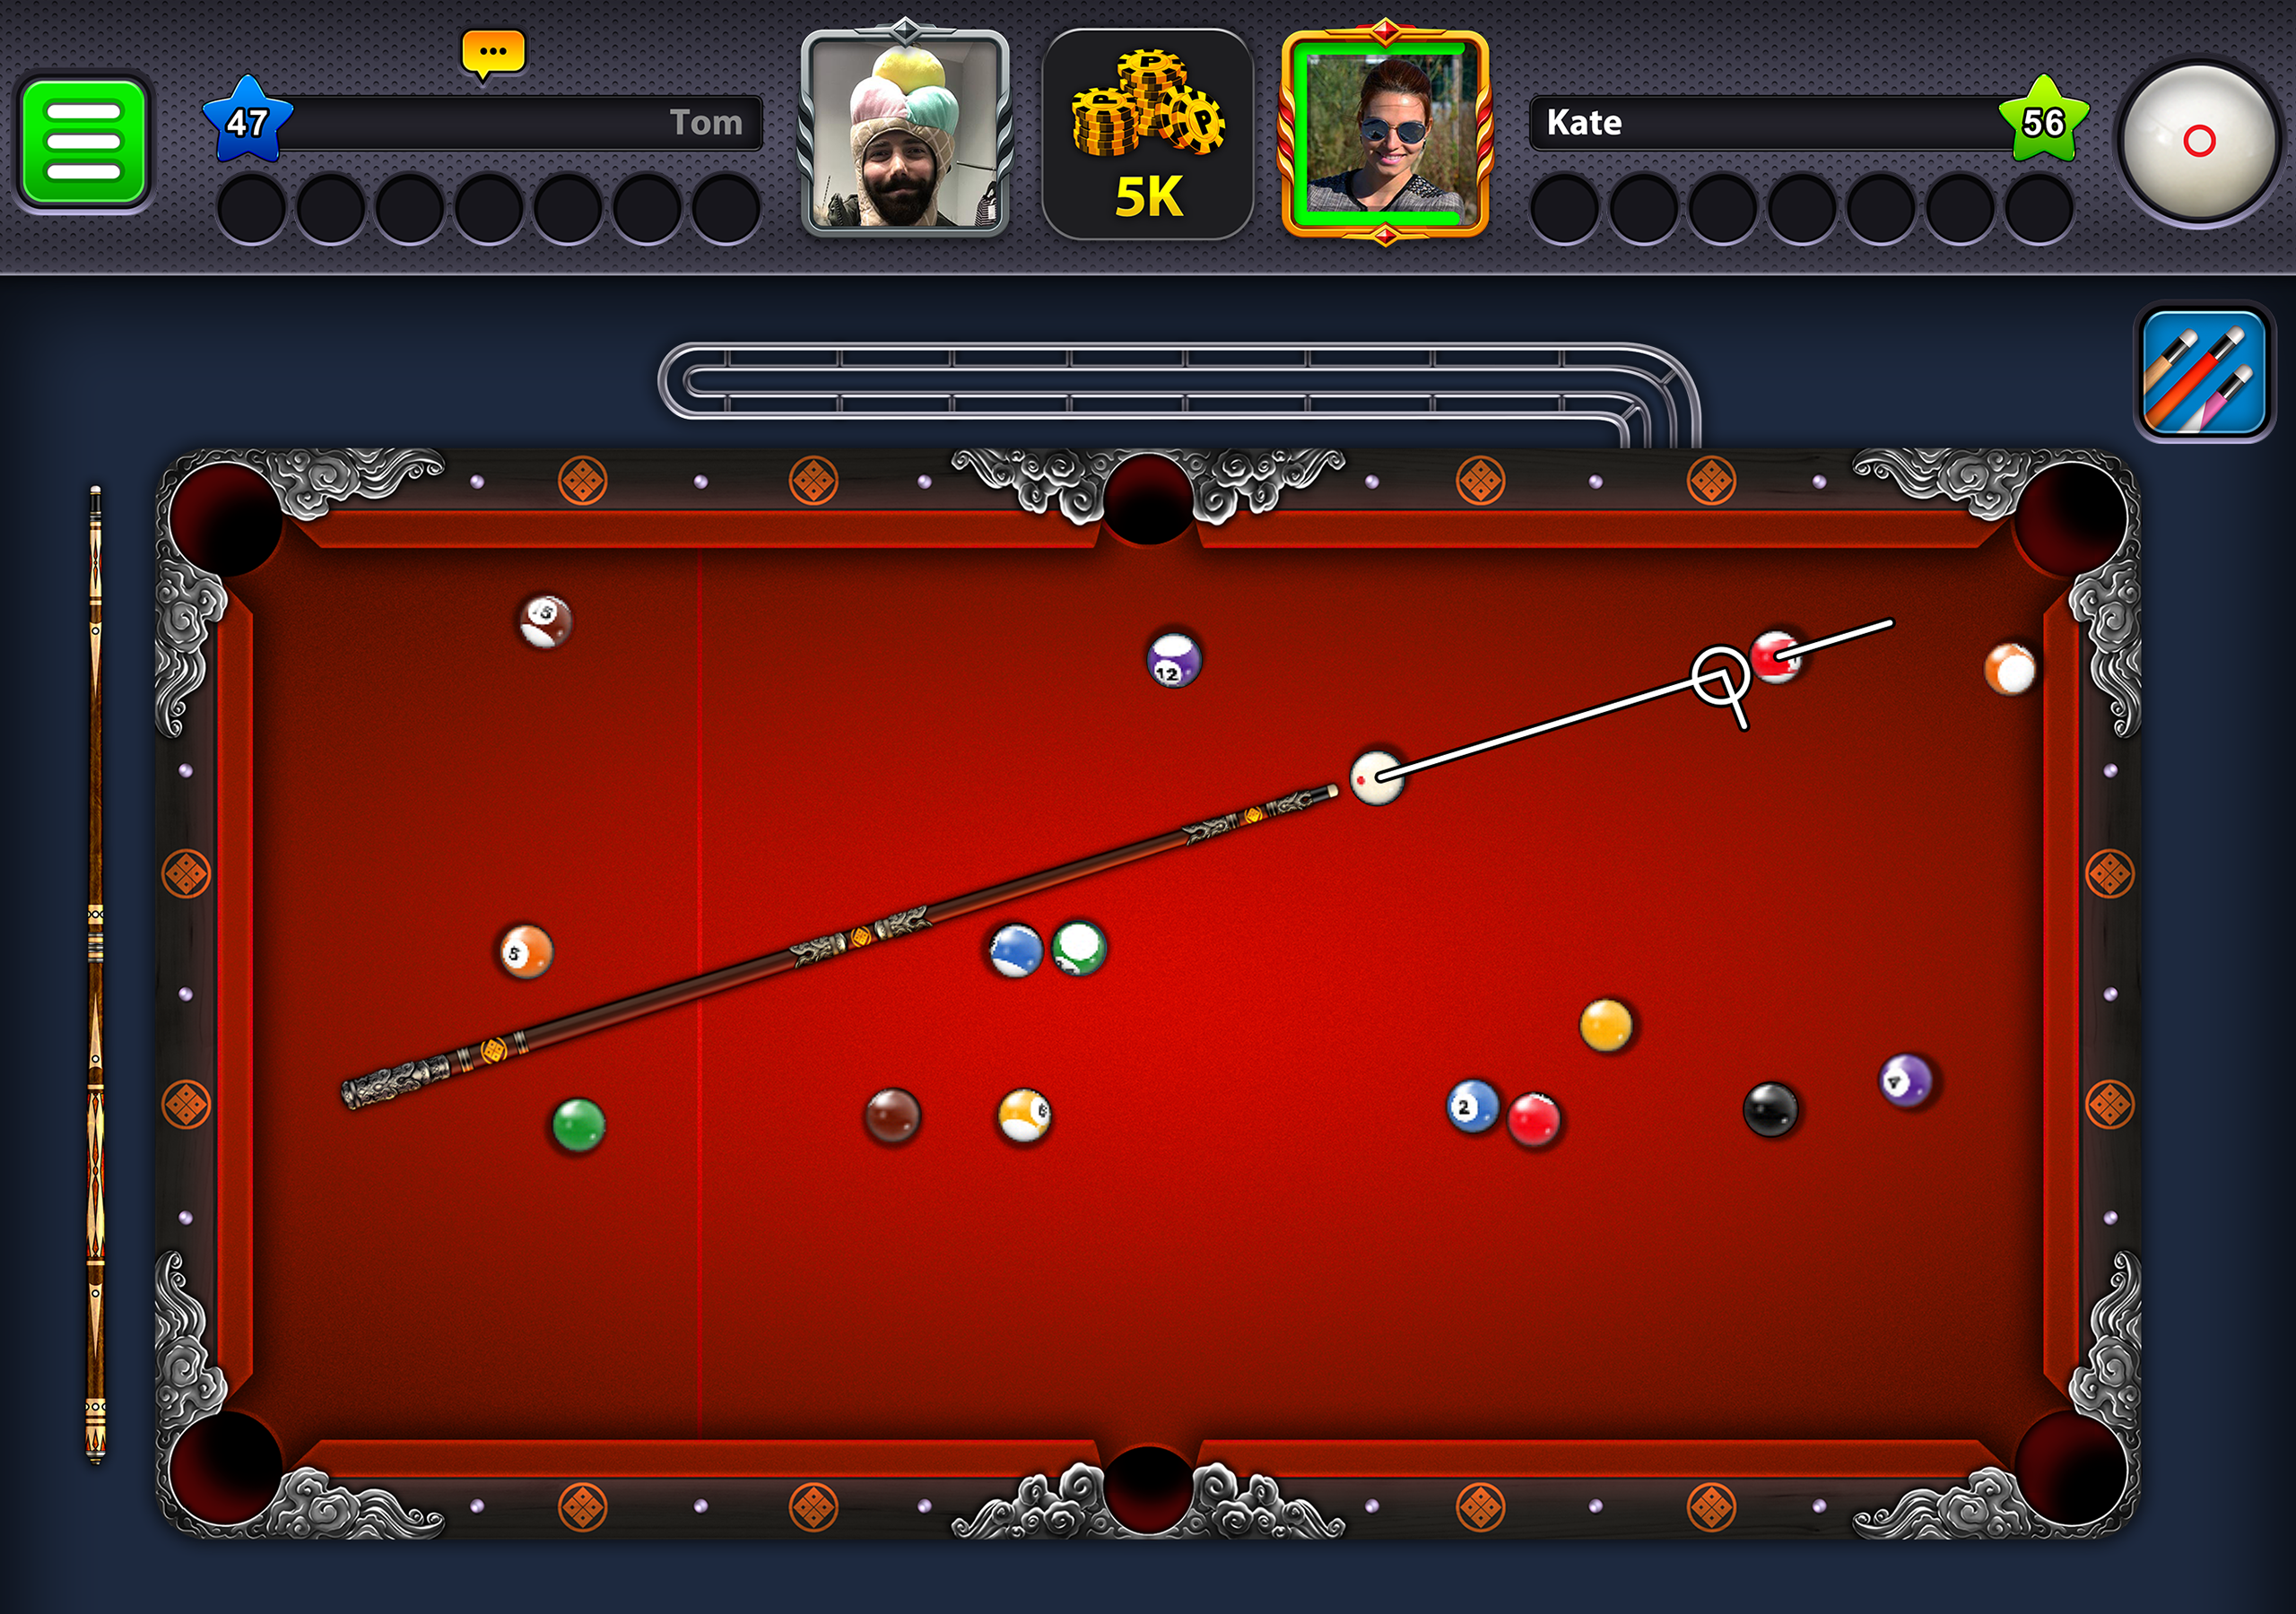 Baixe Billiards World - 8 ball pool no PC